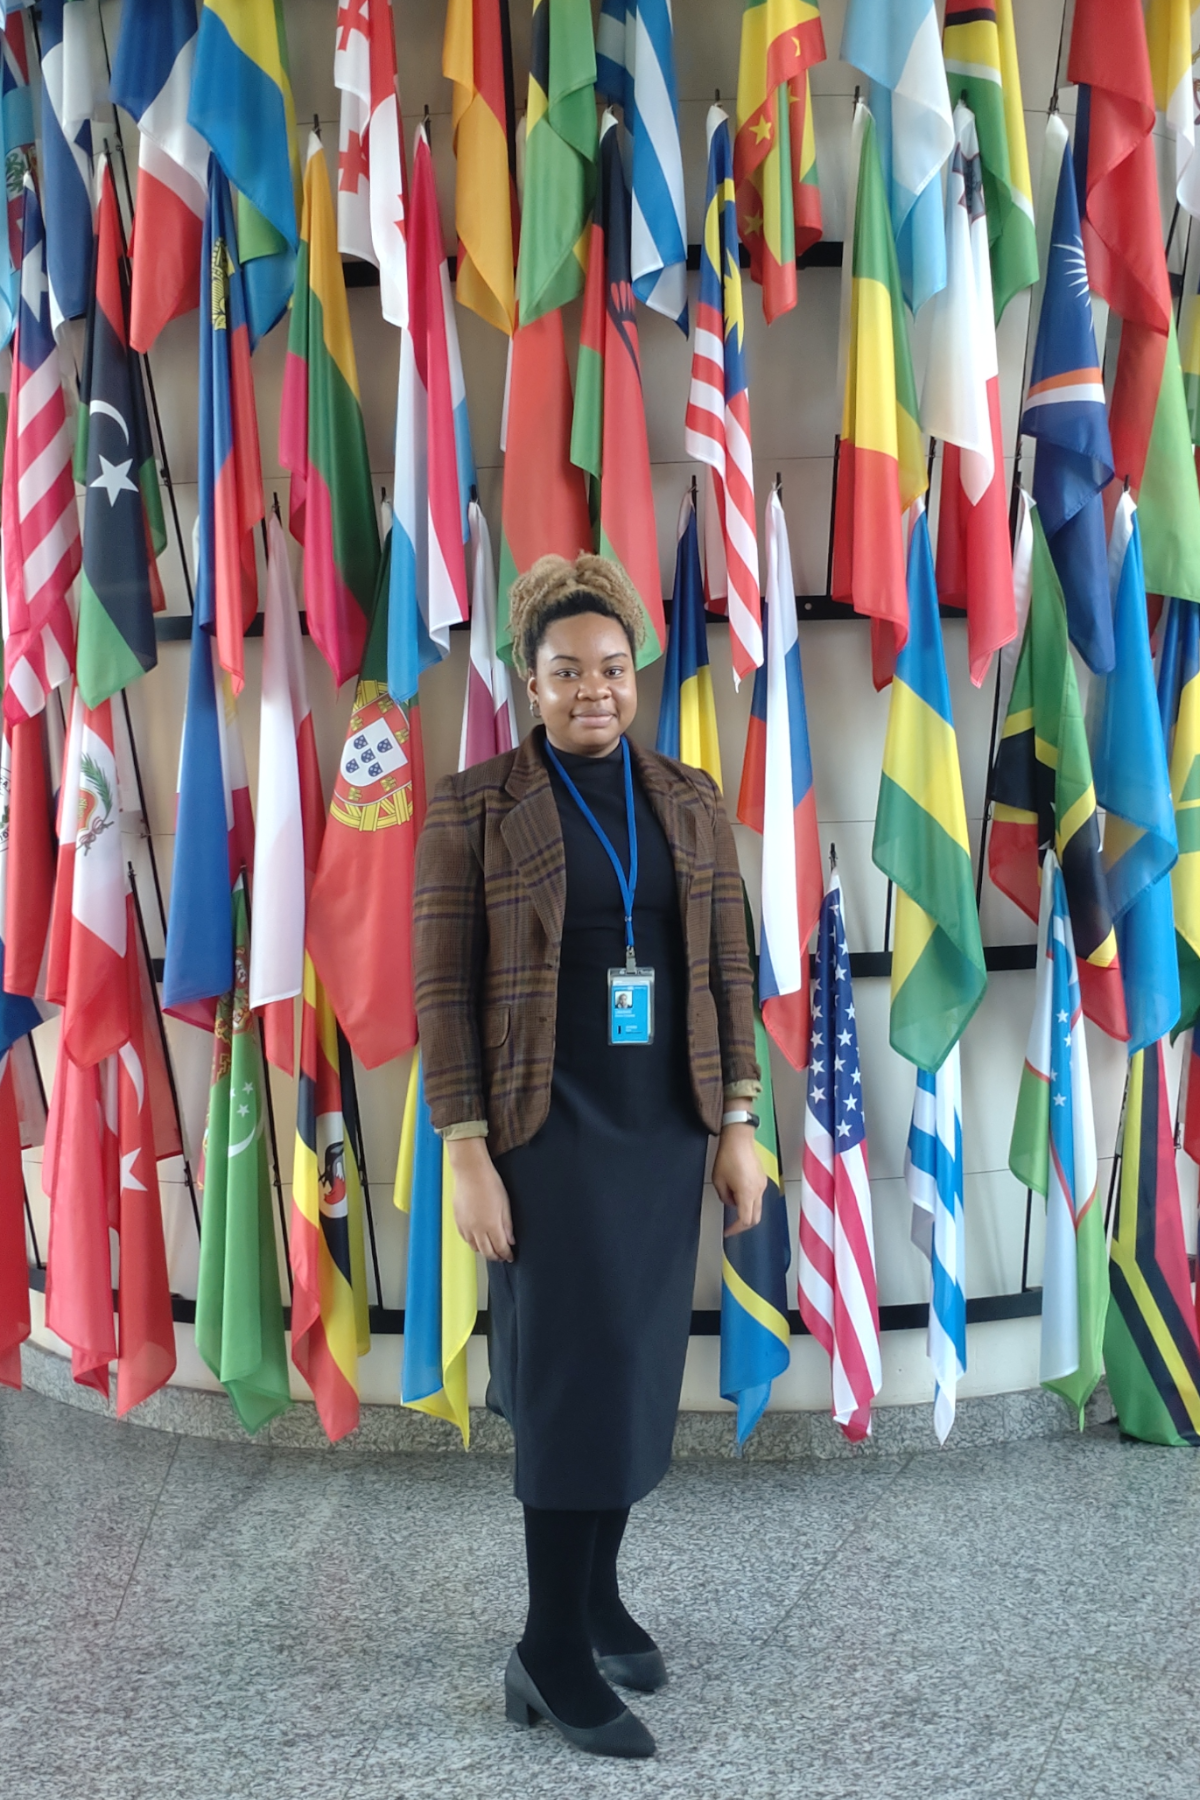 Nkeiru Ubadike standing, smiling with international flags behind her, inside the International Atomic Energy Agency Headquarters in Vienna, Austria, where she is interning. 